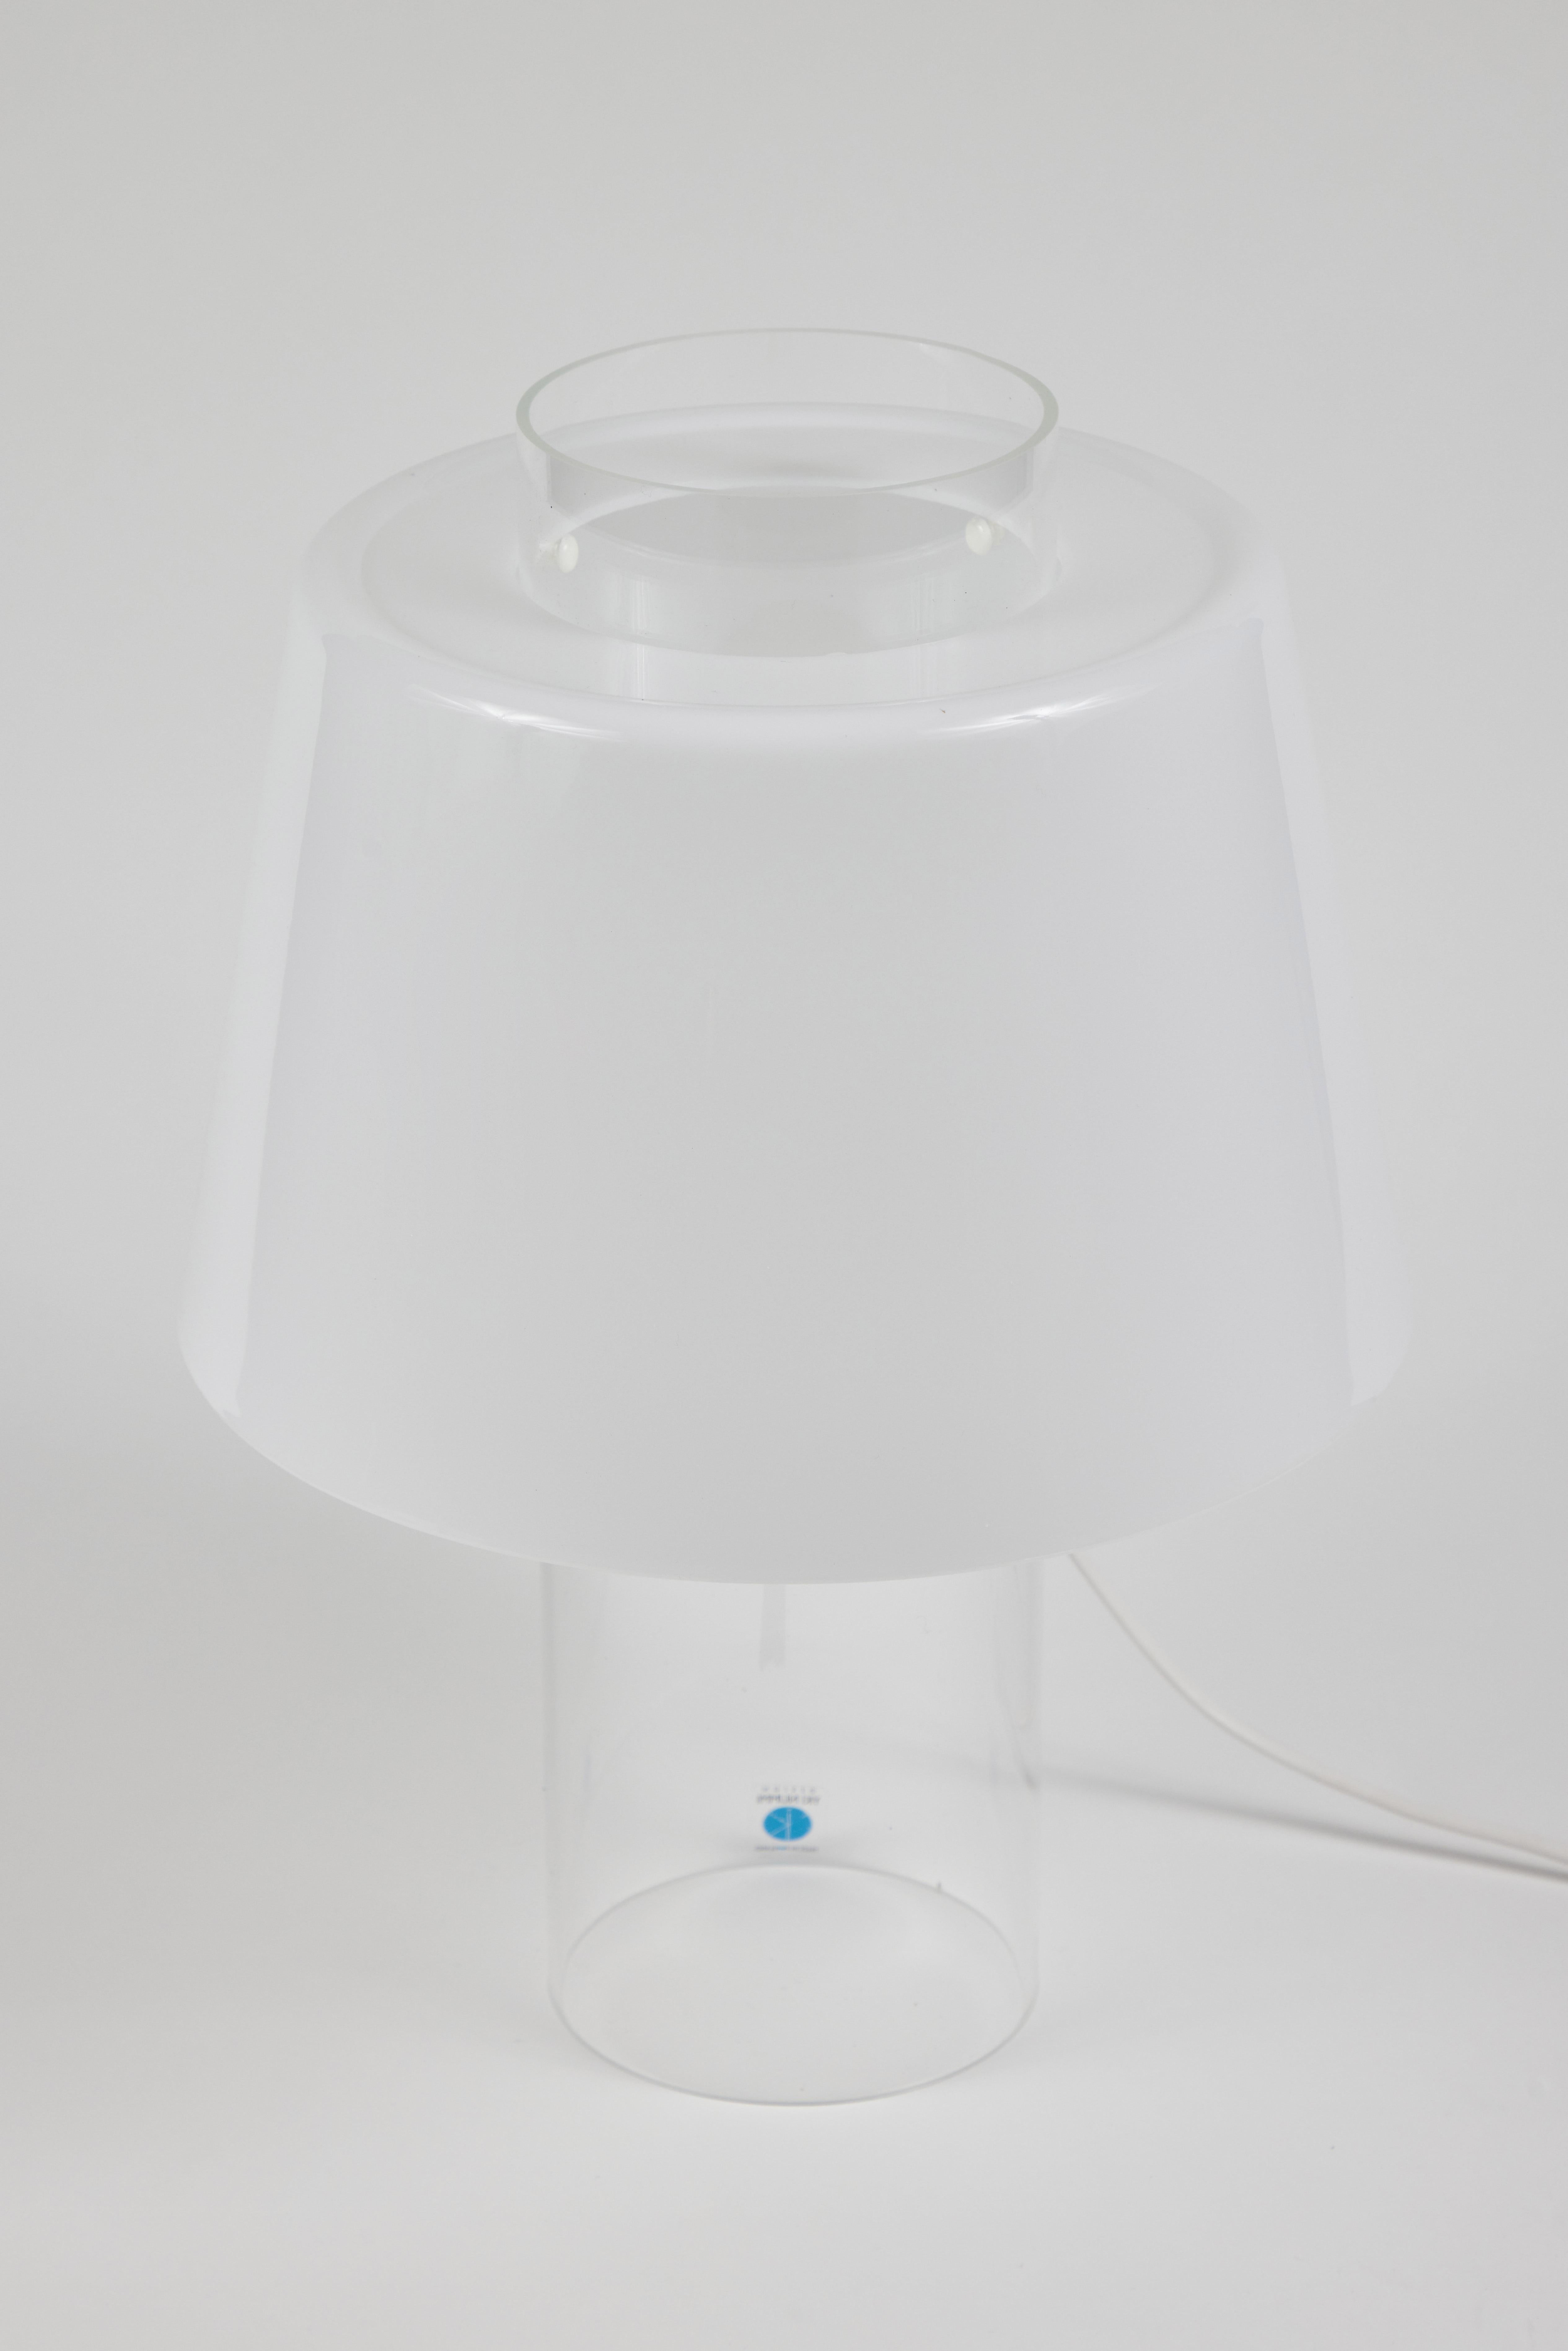 Yki Nummi 'Modern Art' Table Lamp for Innolux Oy, Finland For Sale 5